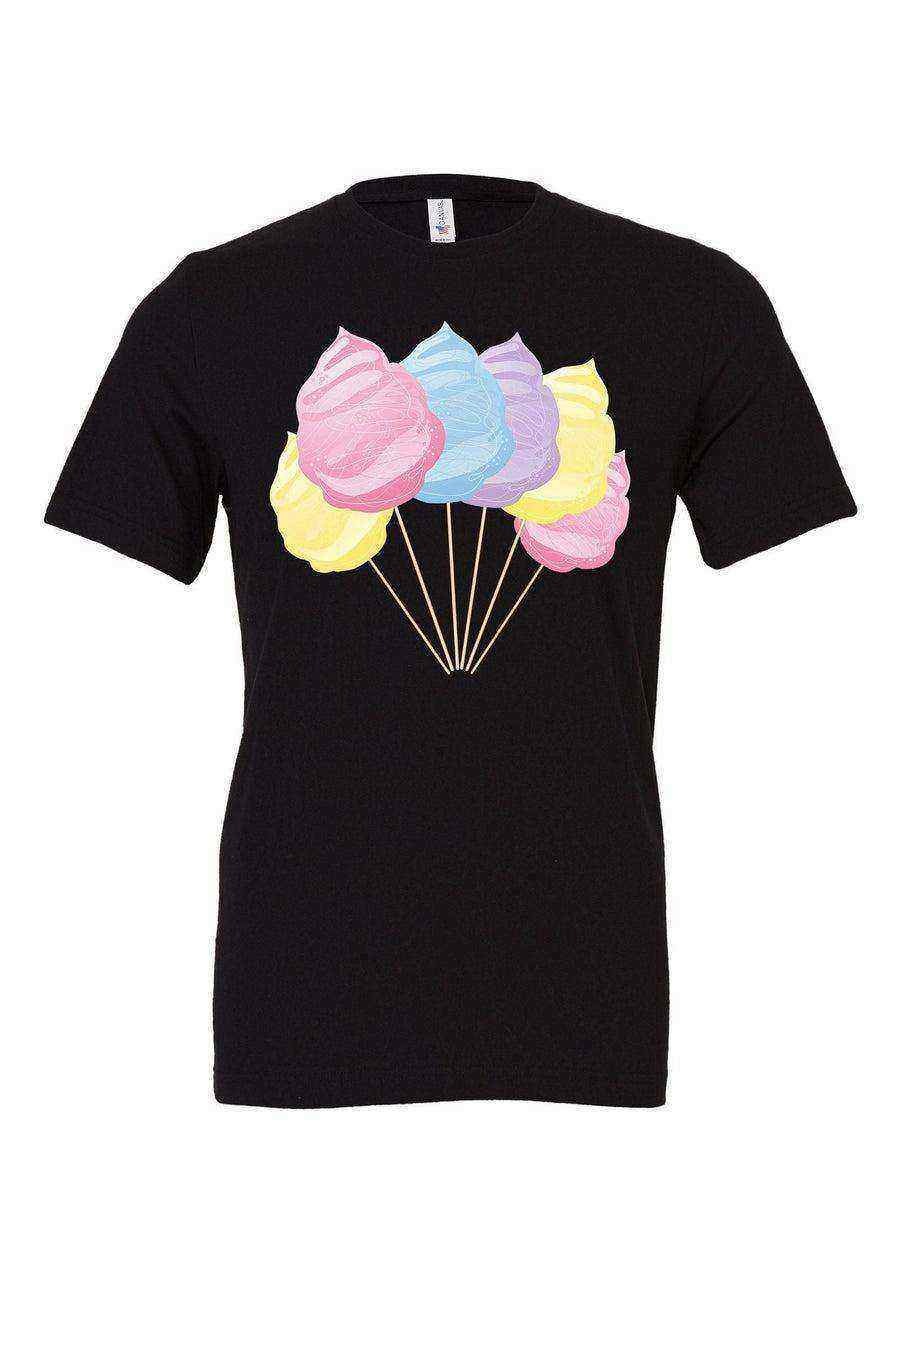 Cotton Candy Shirt | Cotton Candy | Summer Shirt - Dylan's Tees